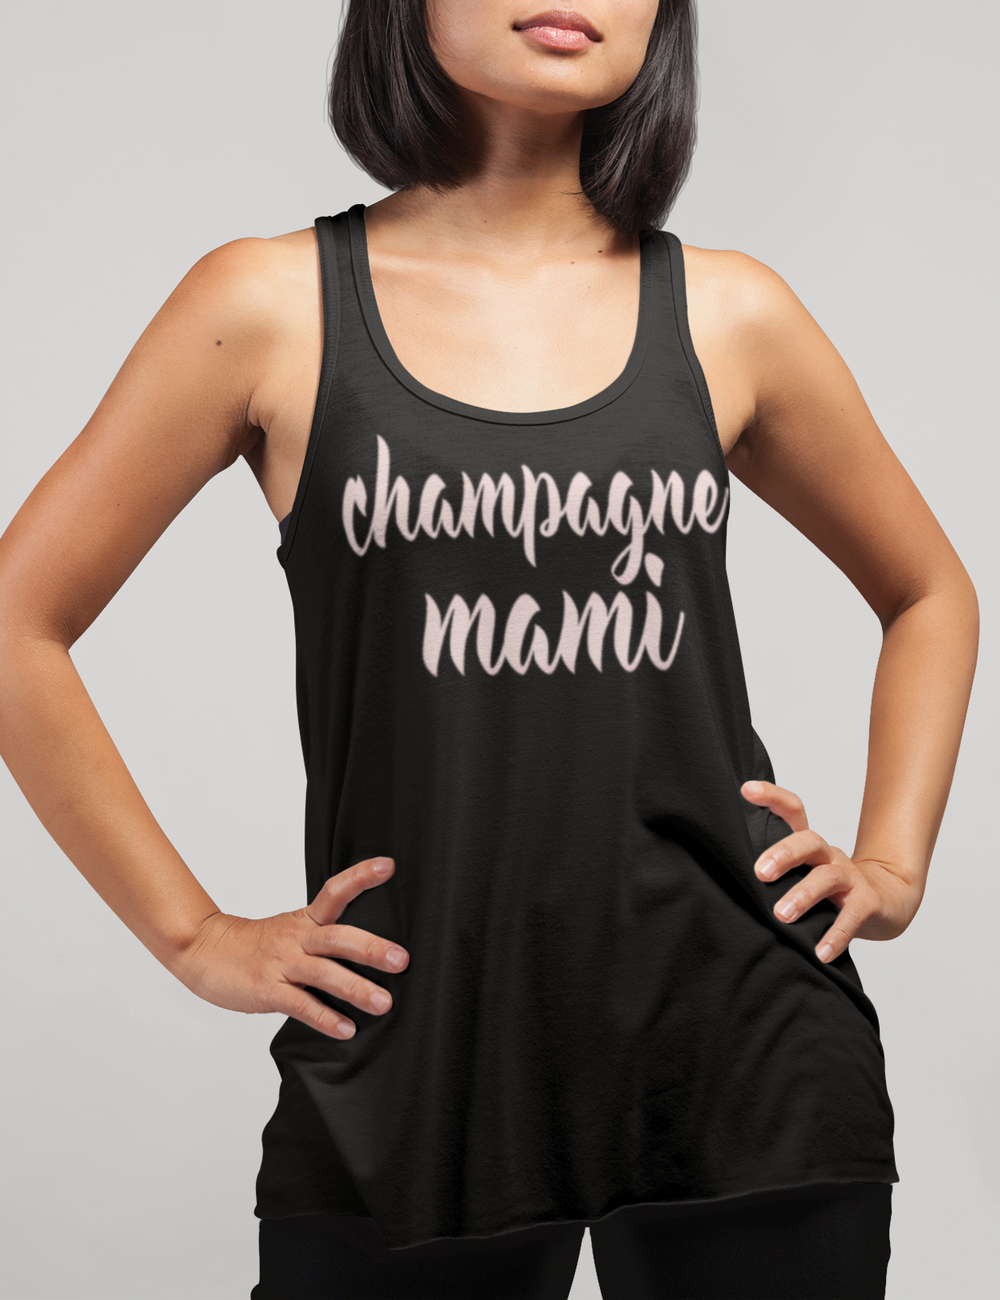 Champagne Mami | Women's Cut Racerback Tank Top OniTakai